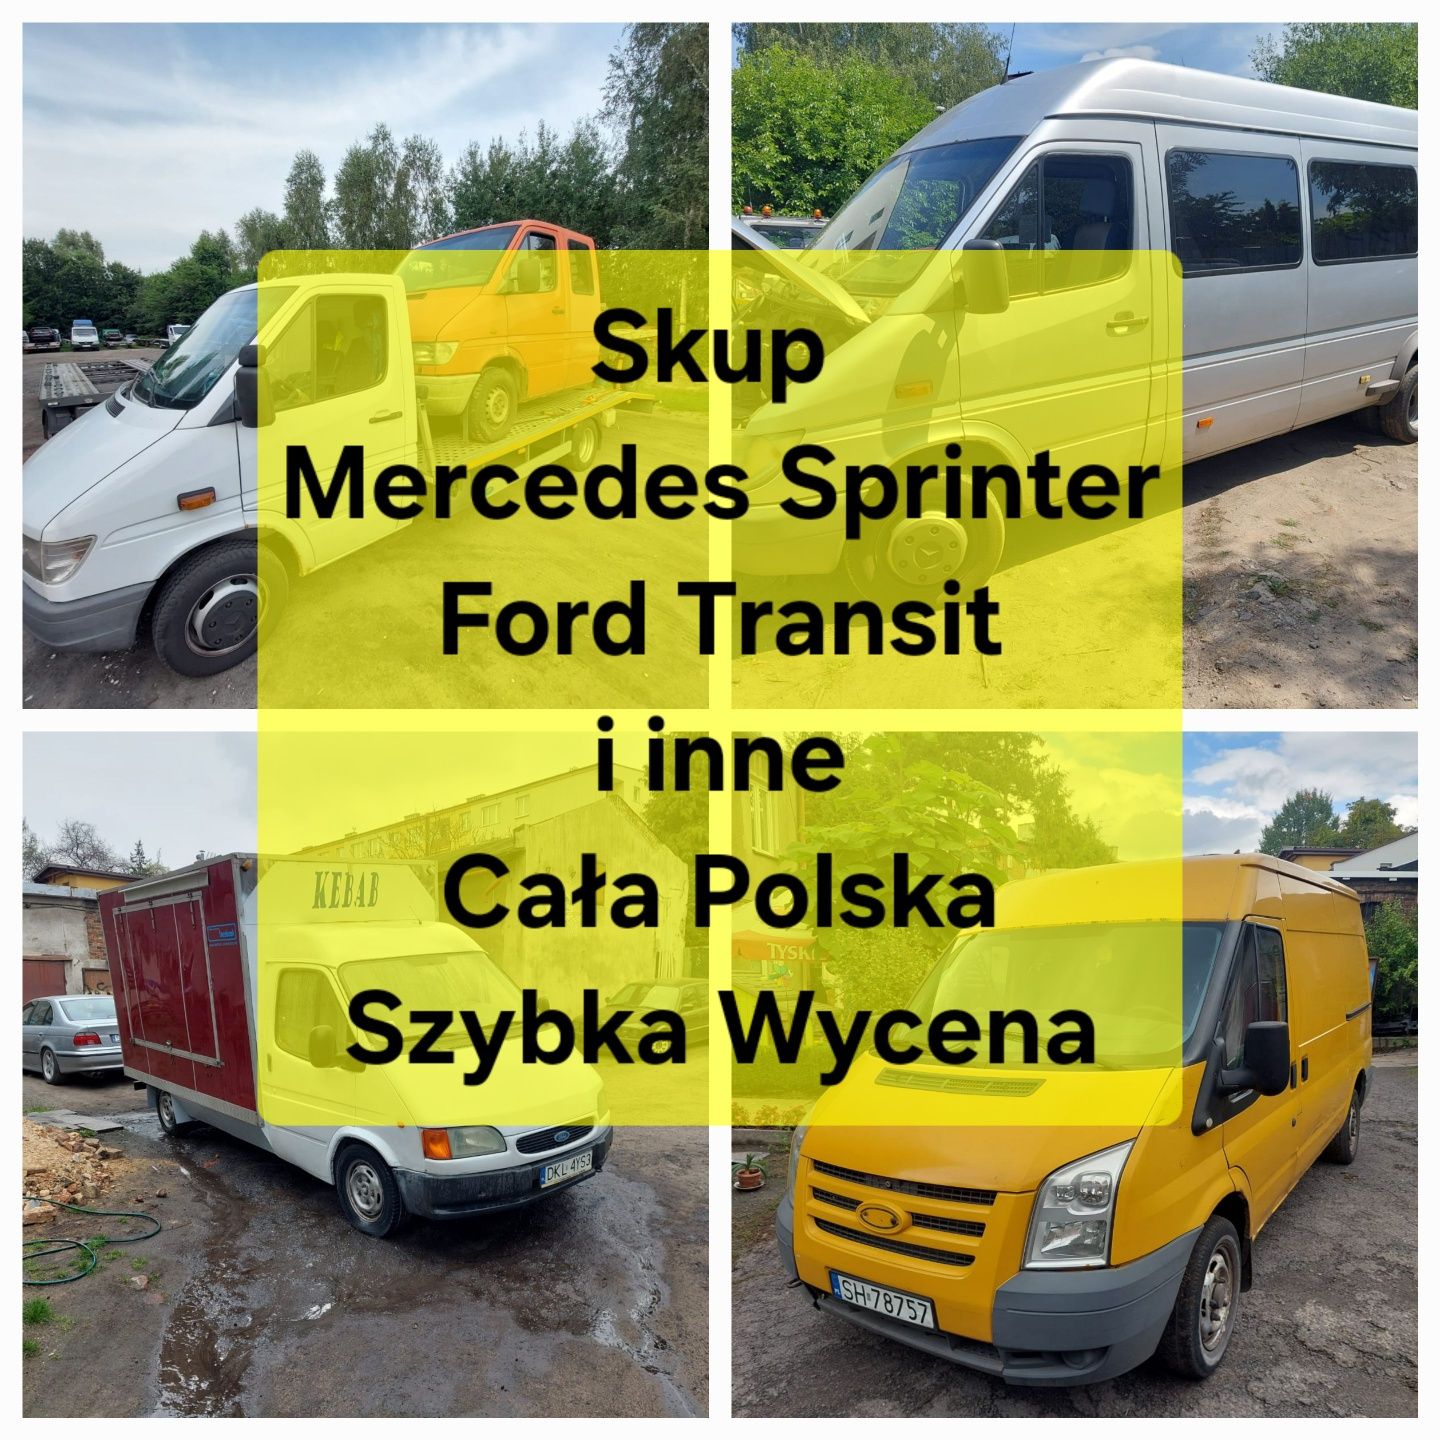 Skup Mercedes Sprinter Ford Transit I Inne Cała Polska